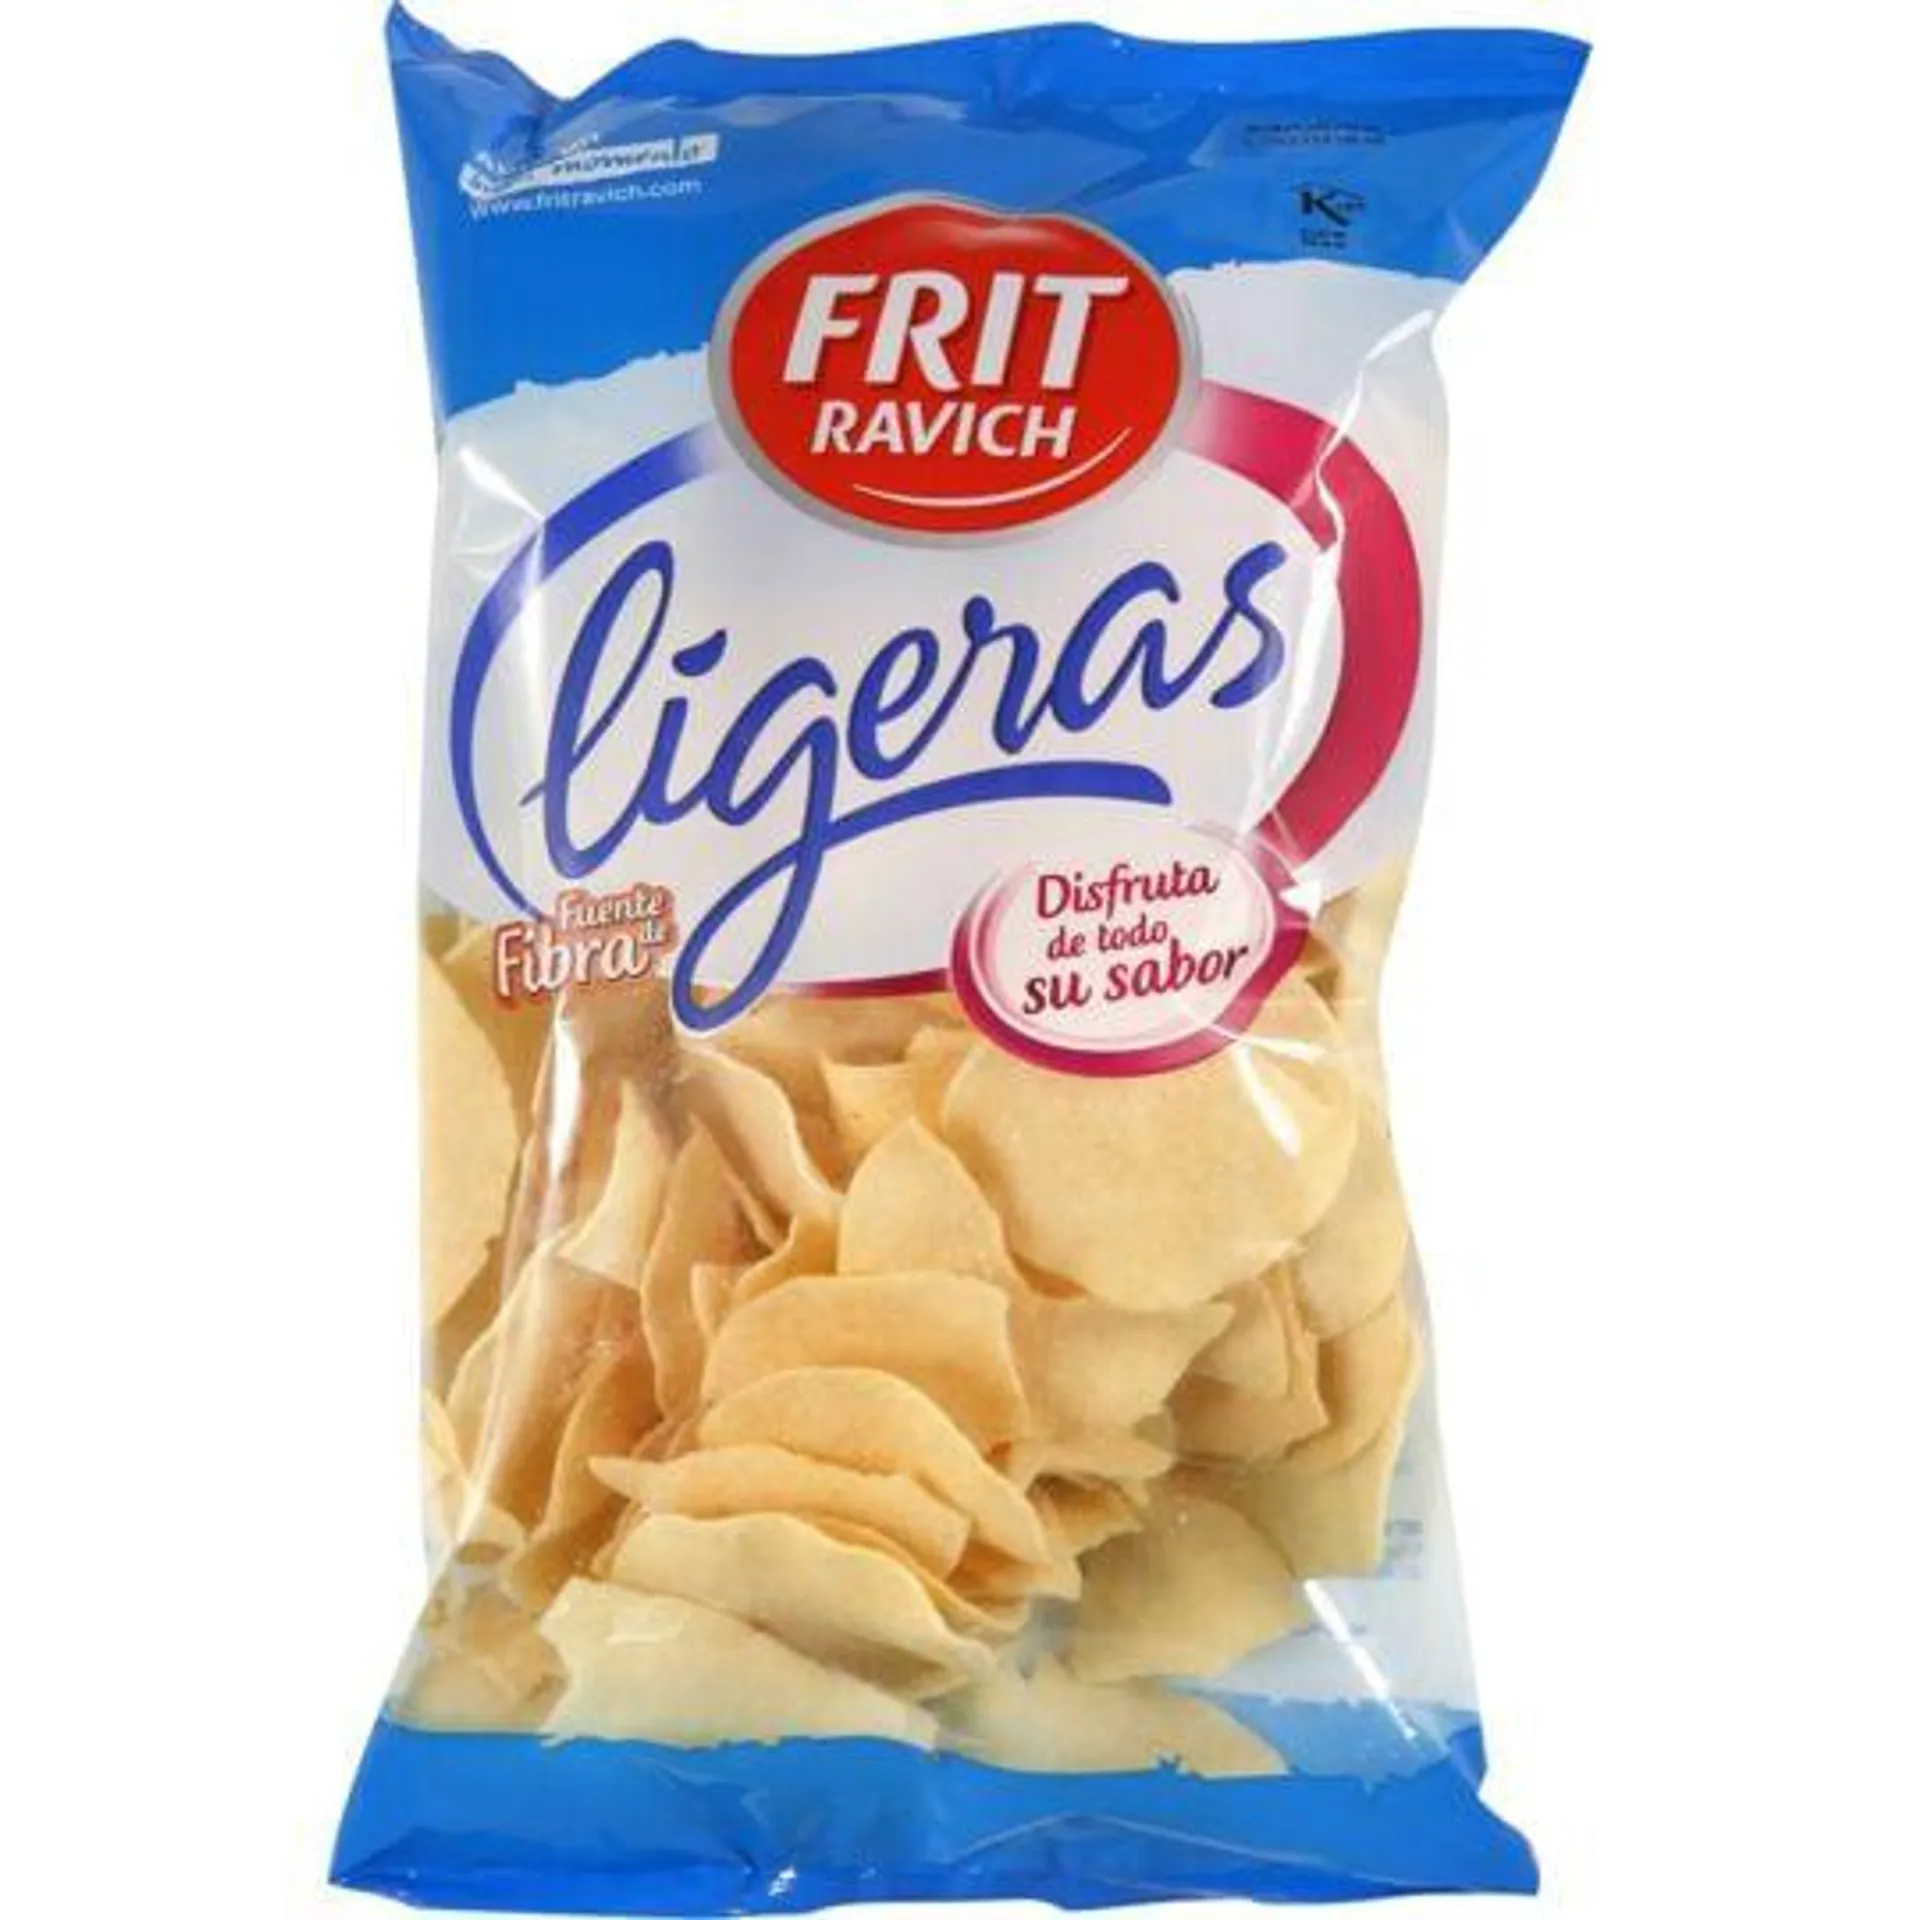 Chips Ligeras FRIT RAVICH